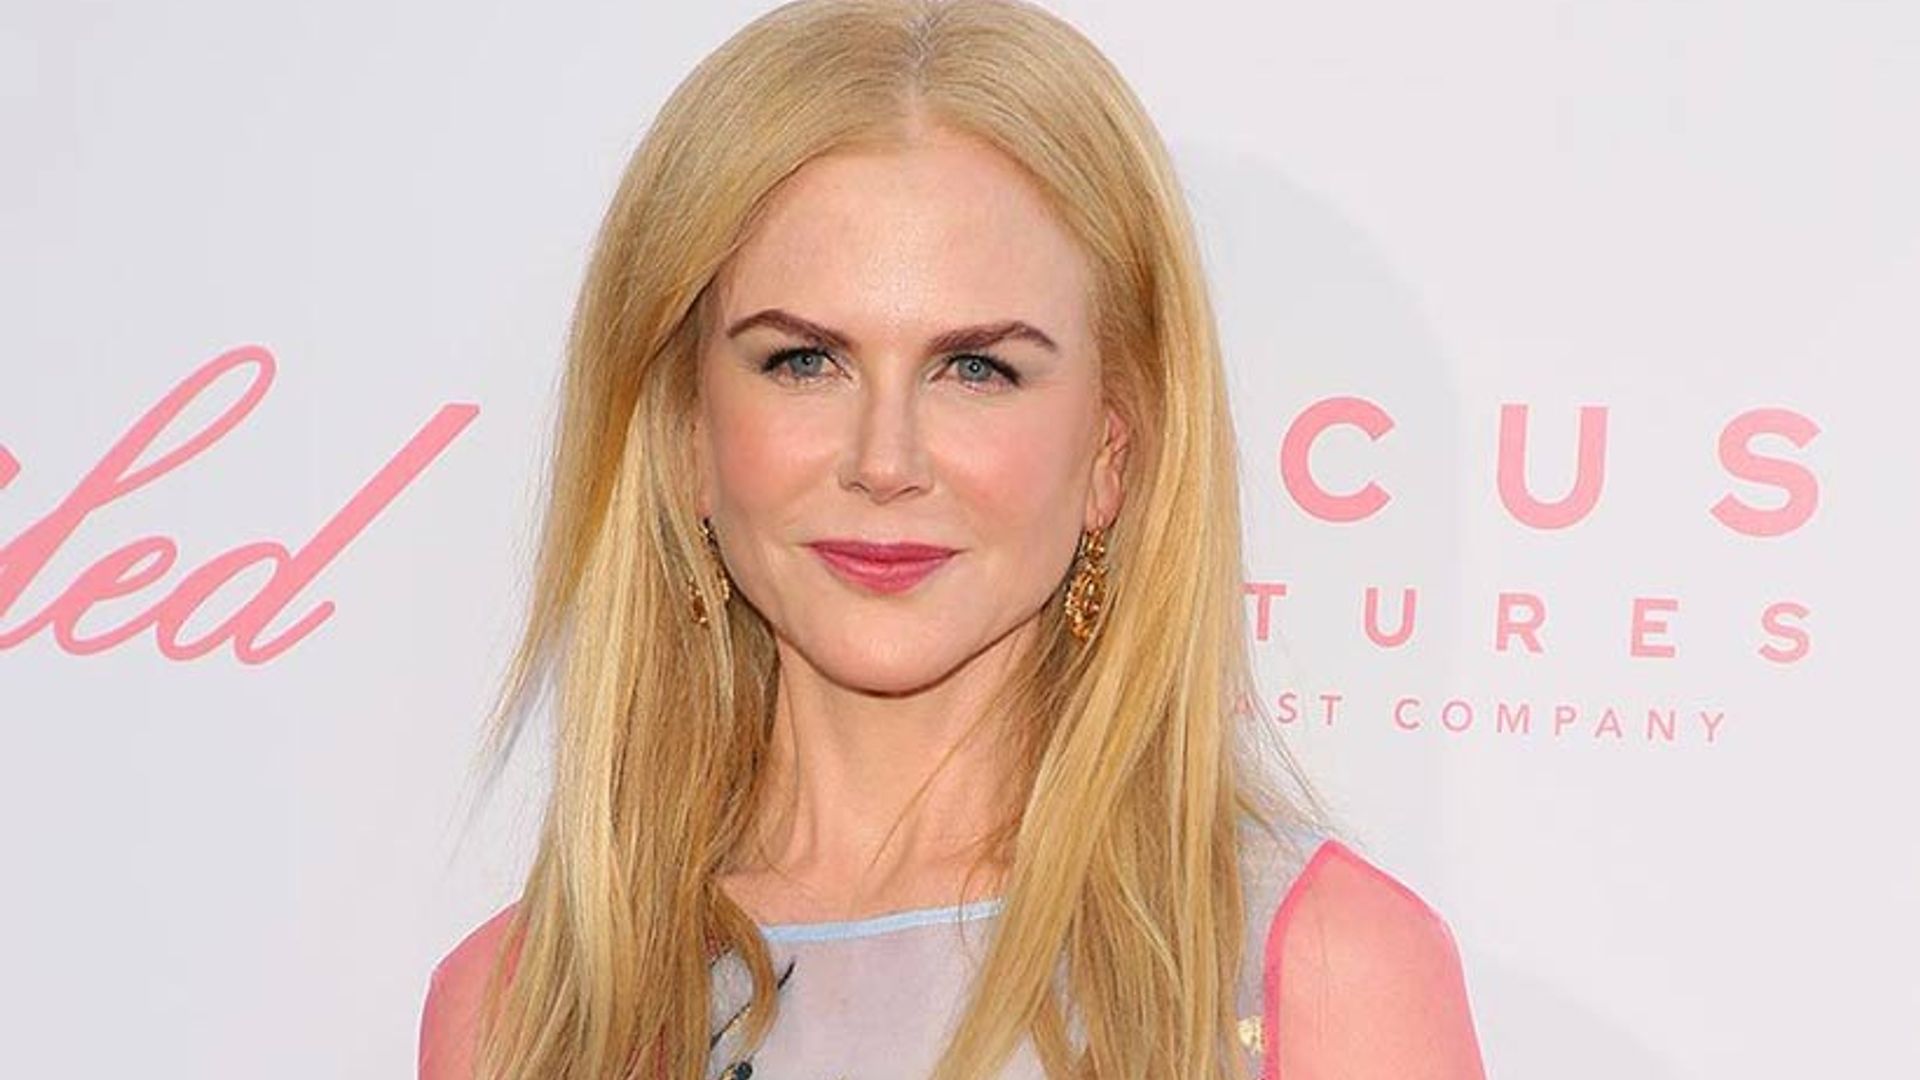 Nicole Kidman on how she'll celebrate her 50th birthday